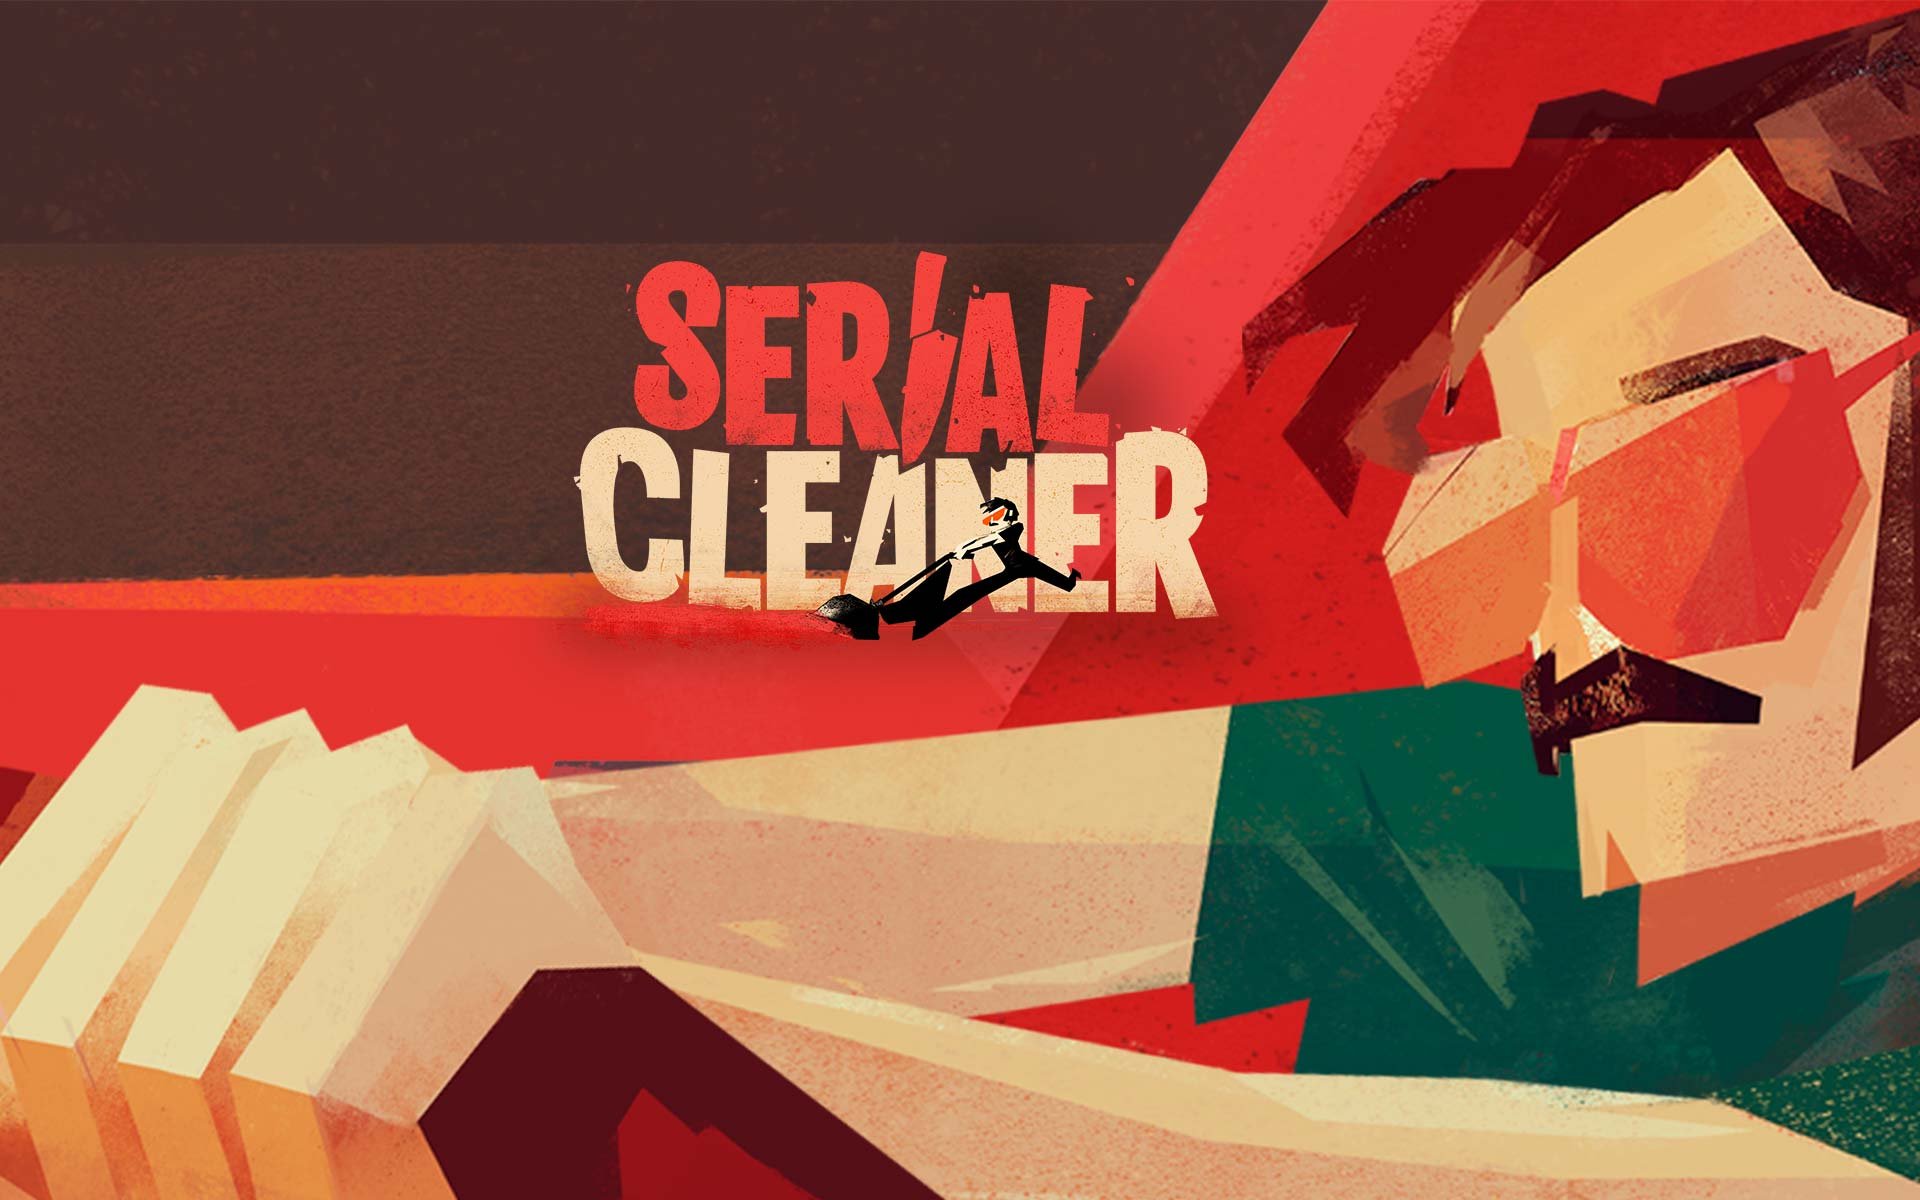 Serial Cleaner por R$ 27.99